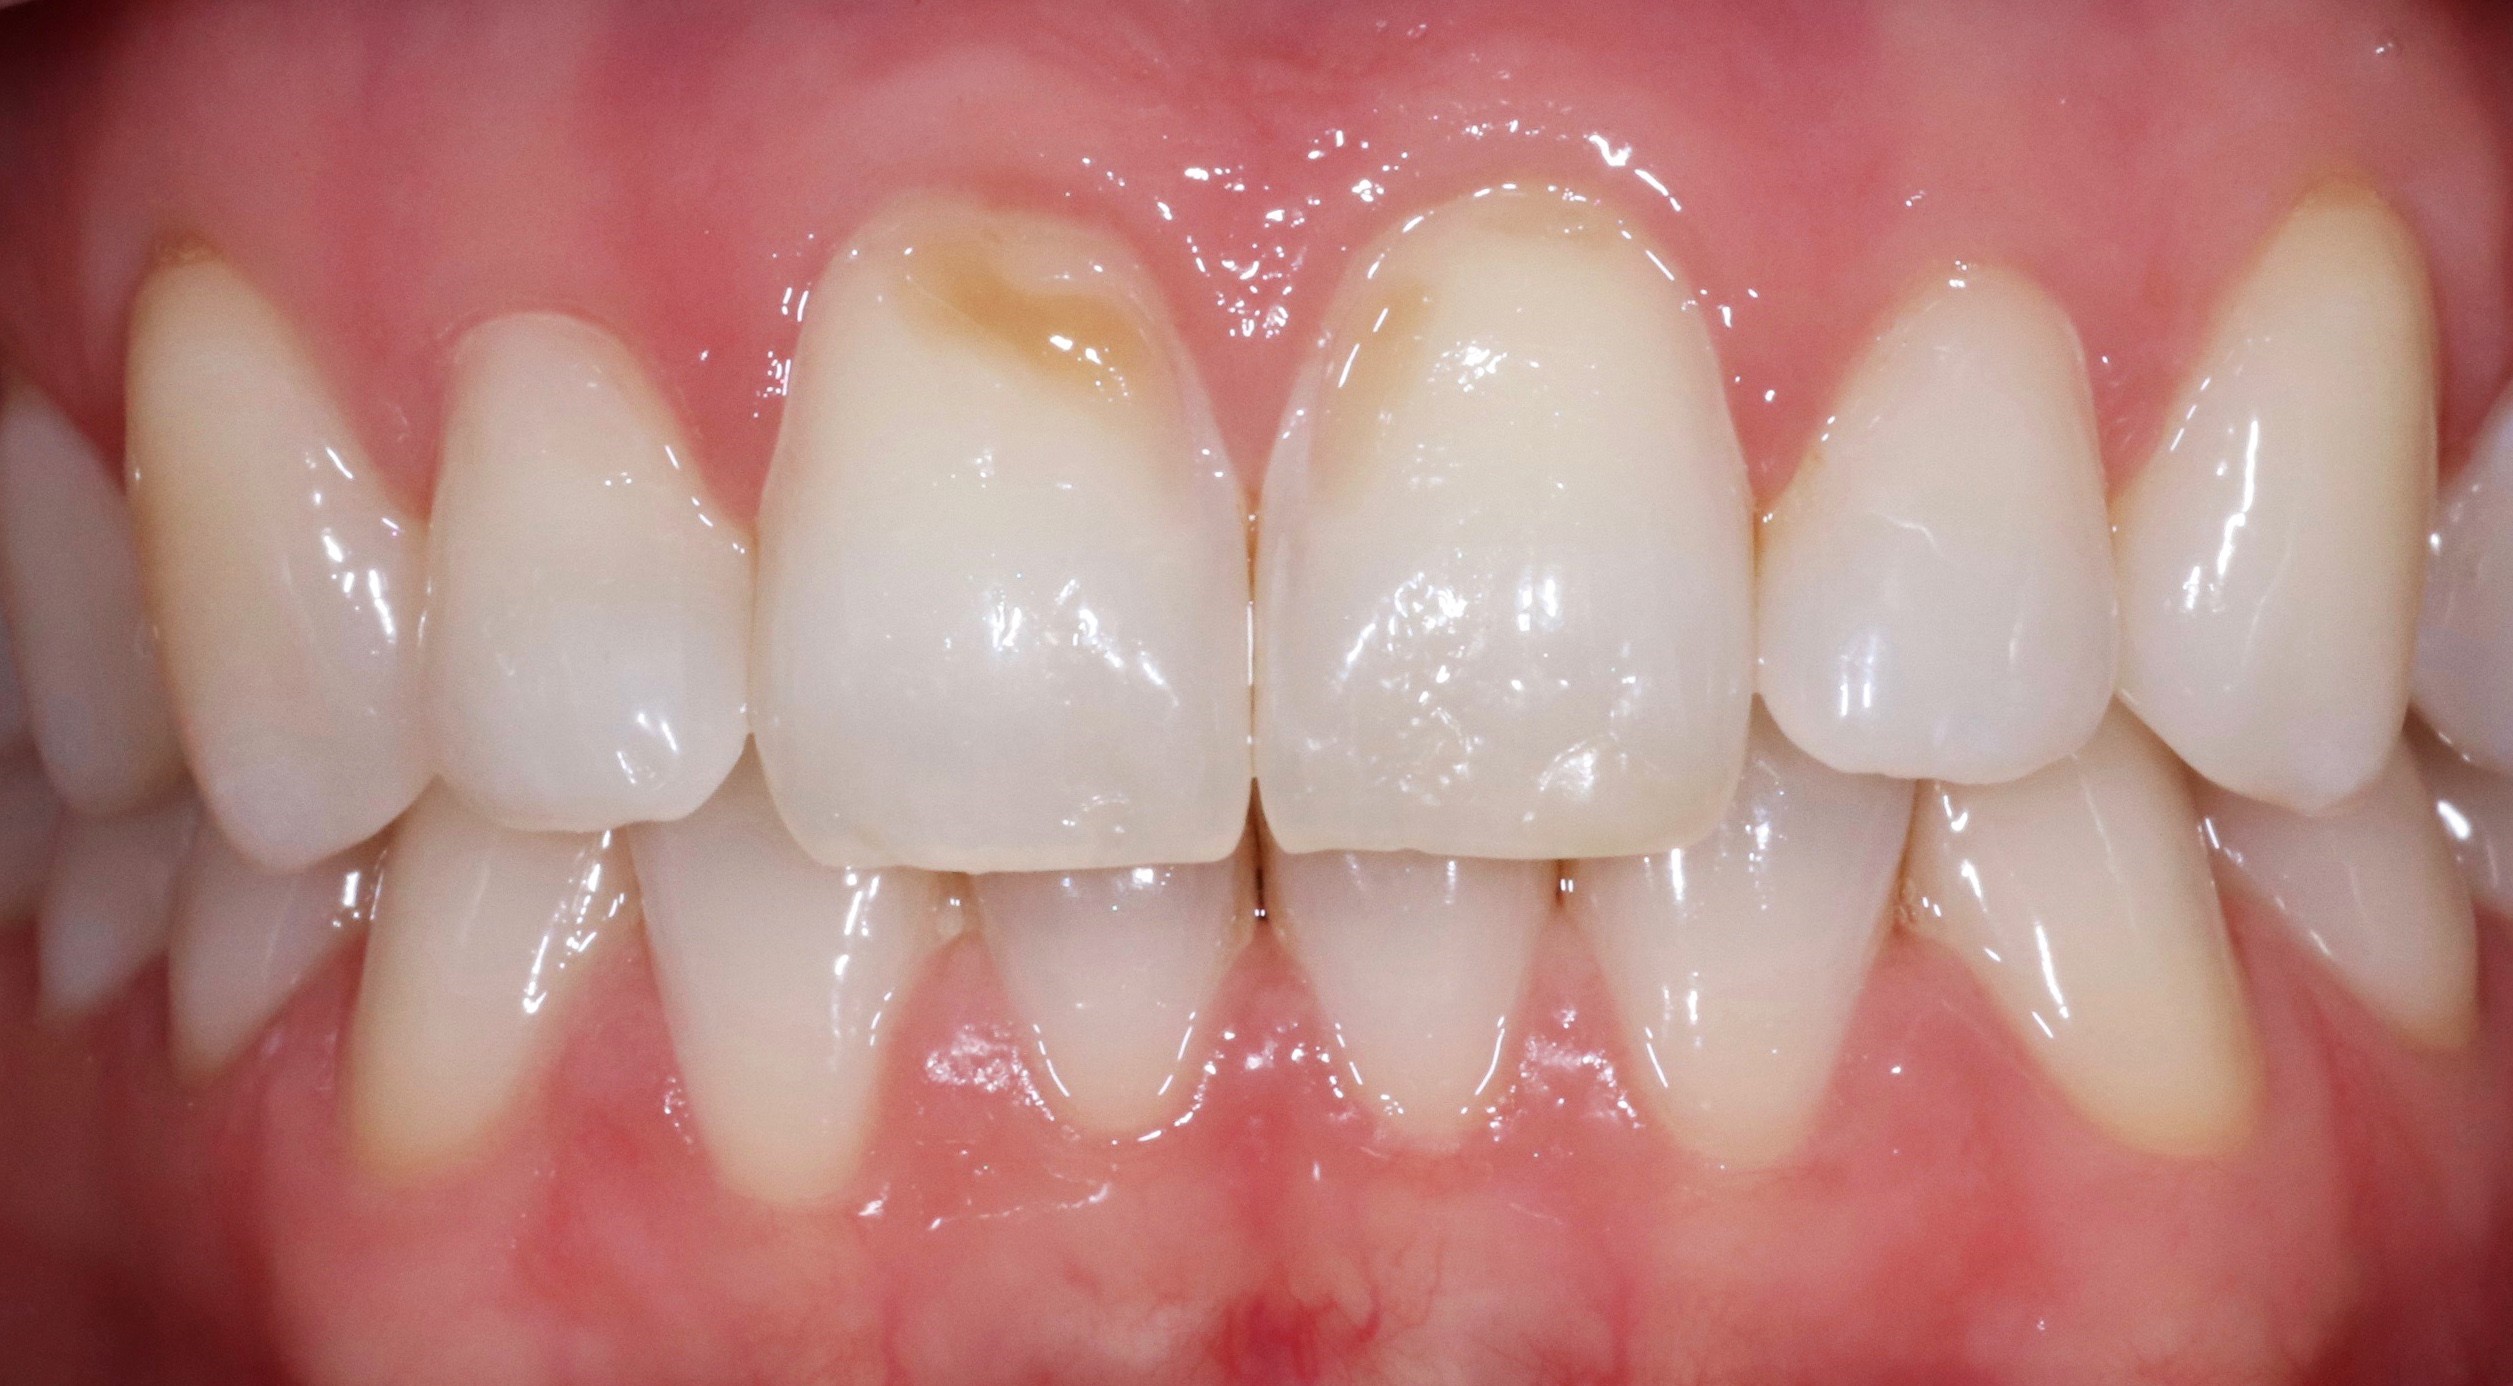 veneers-munich-dental-veneer-clinic-treatment-result-discoloration-before